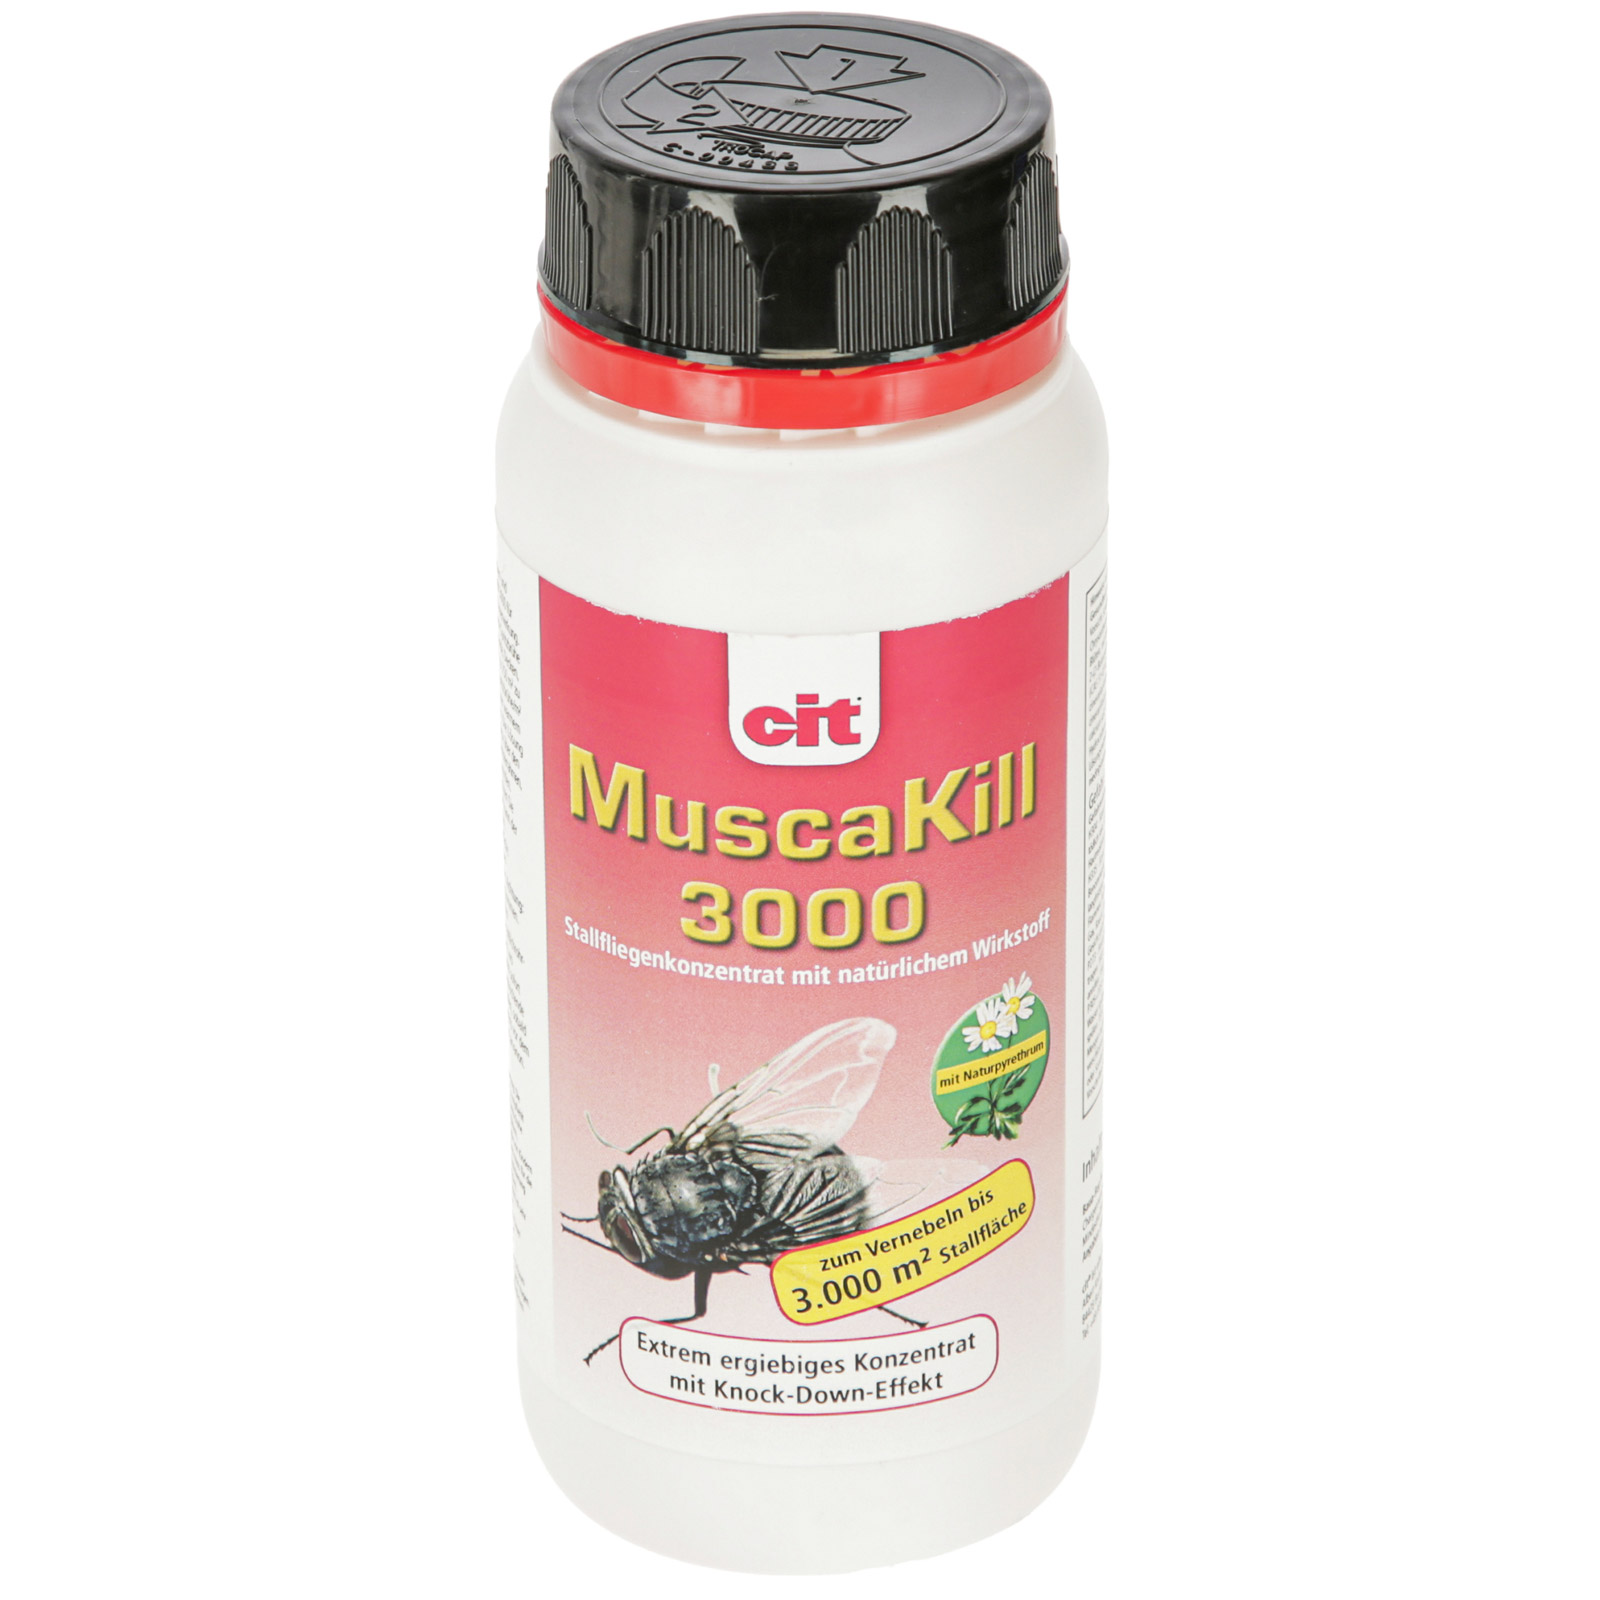 Cit Stallfliegenkonzentrat MuscaKill 3000 250 ml